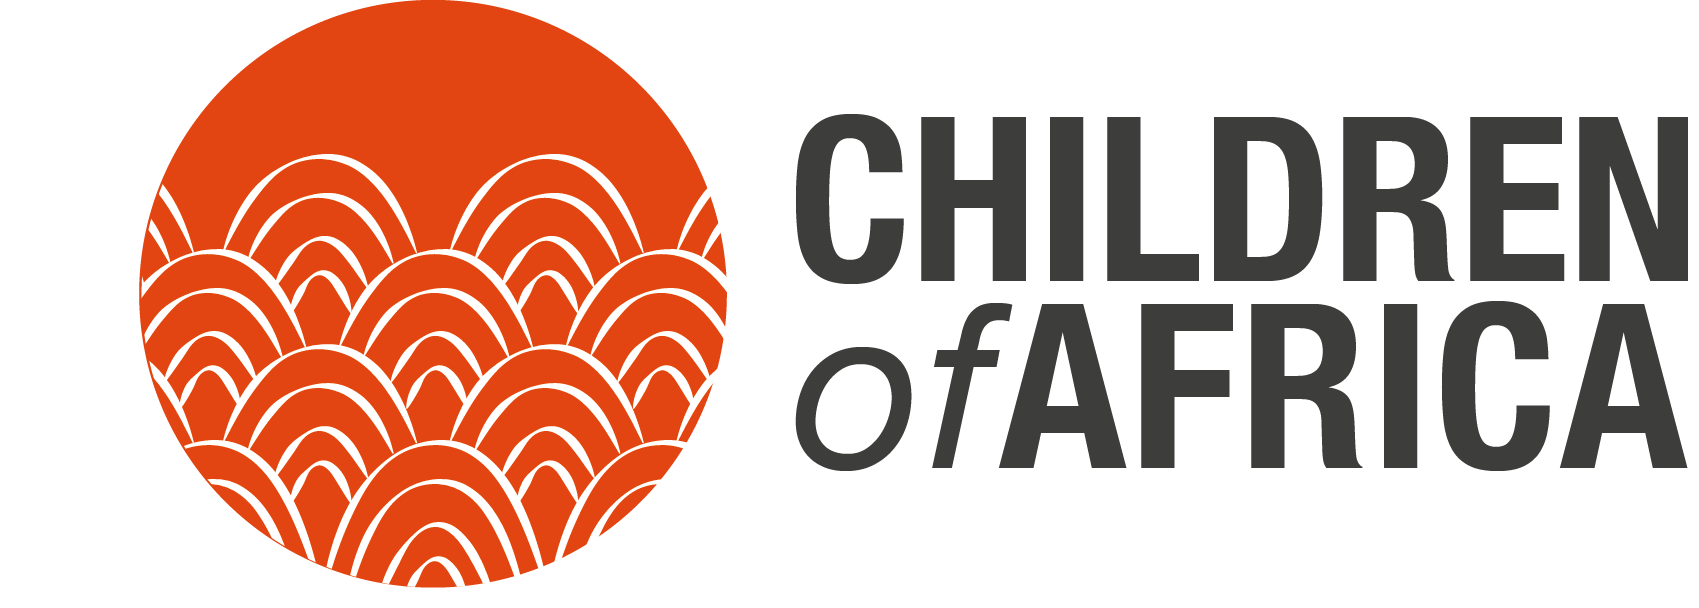 Children of Africa logo